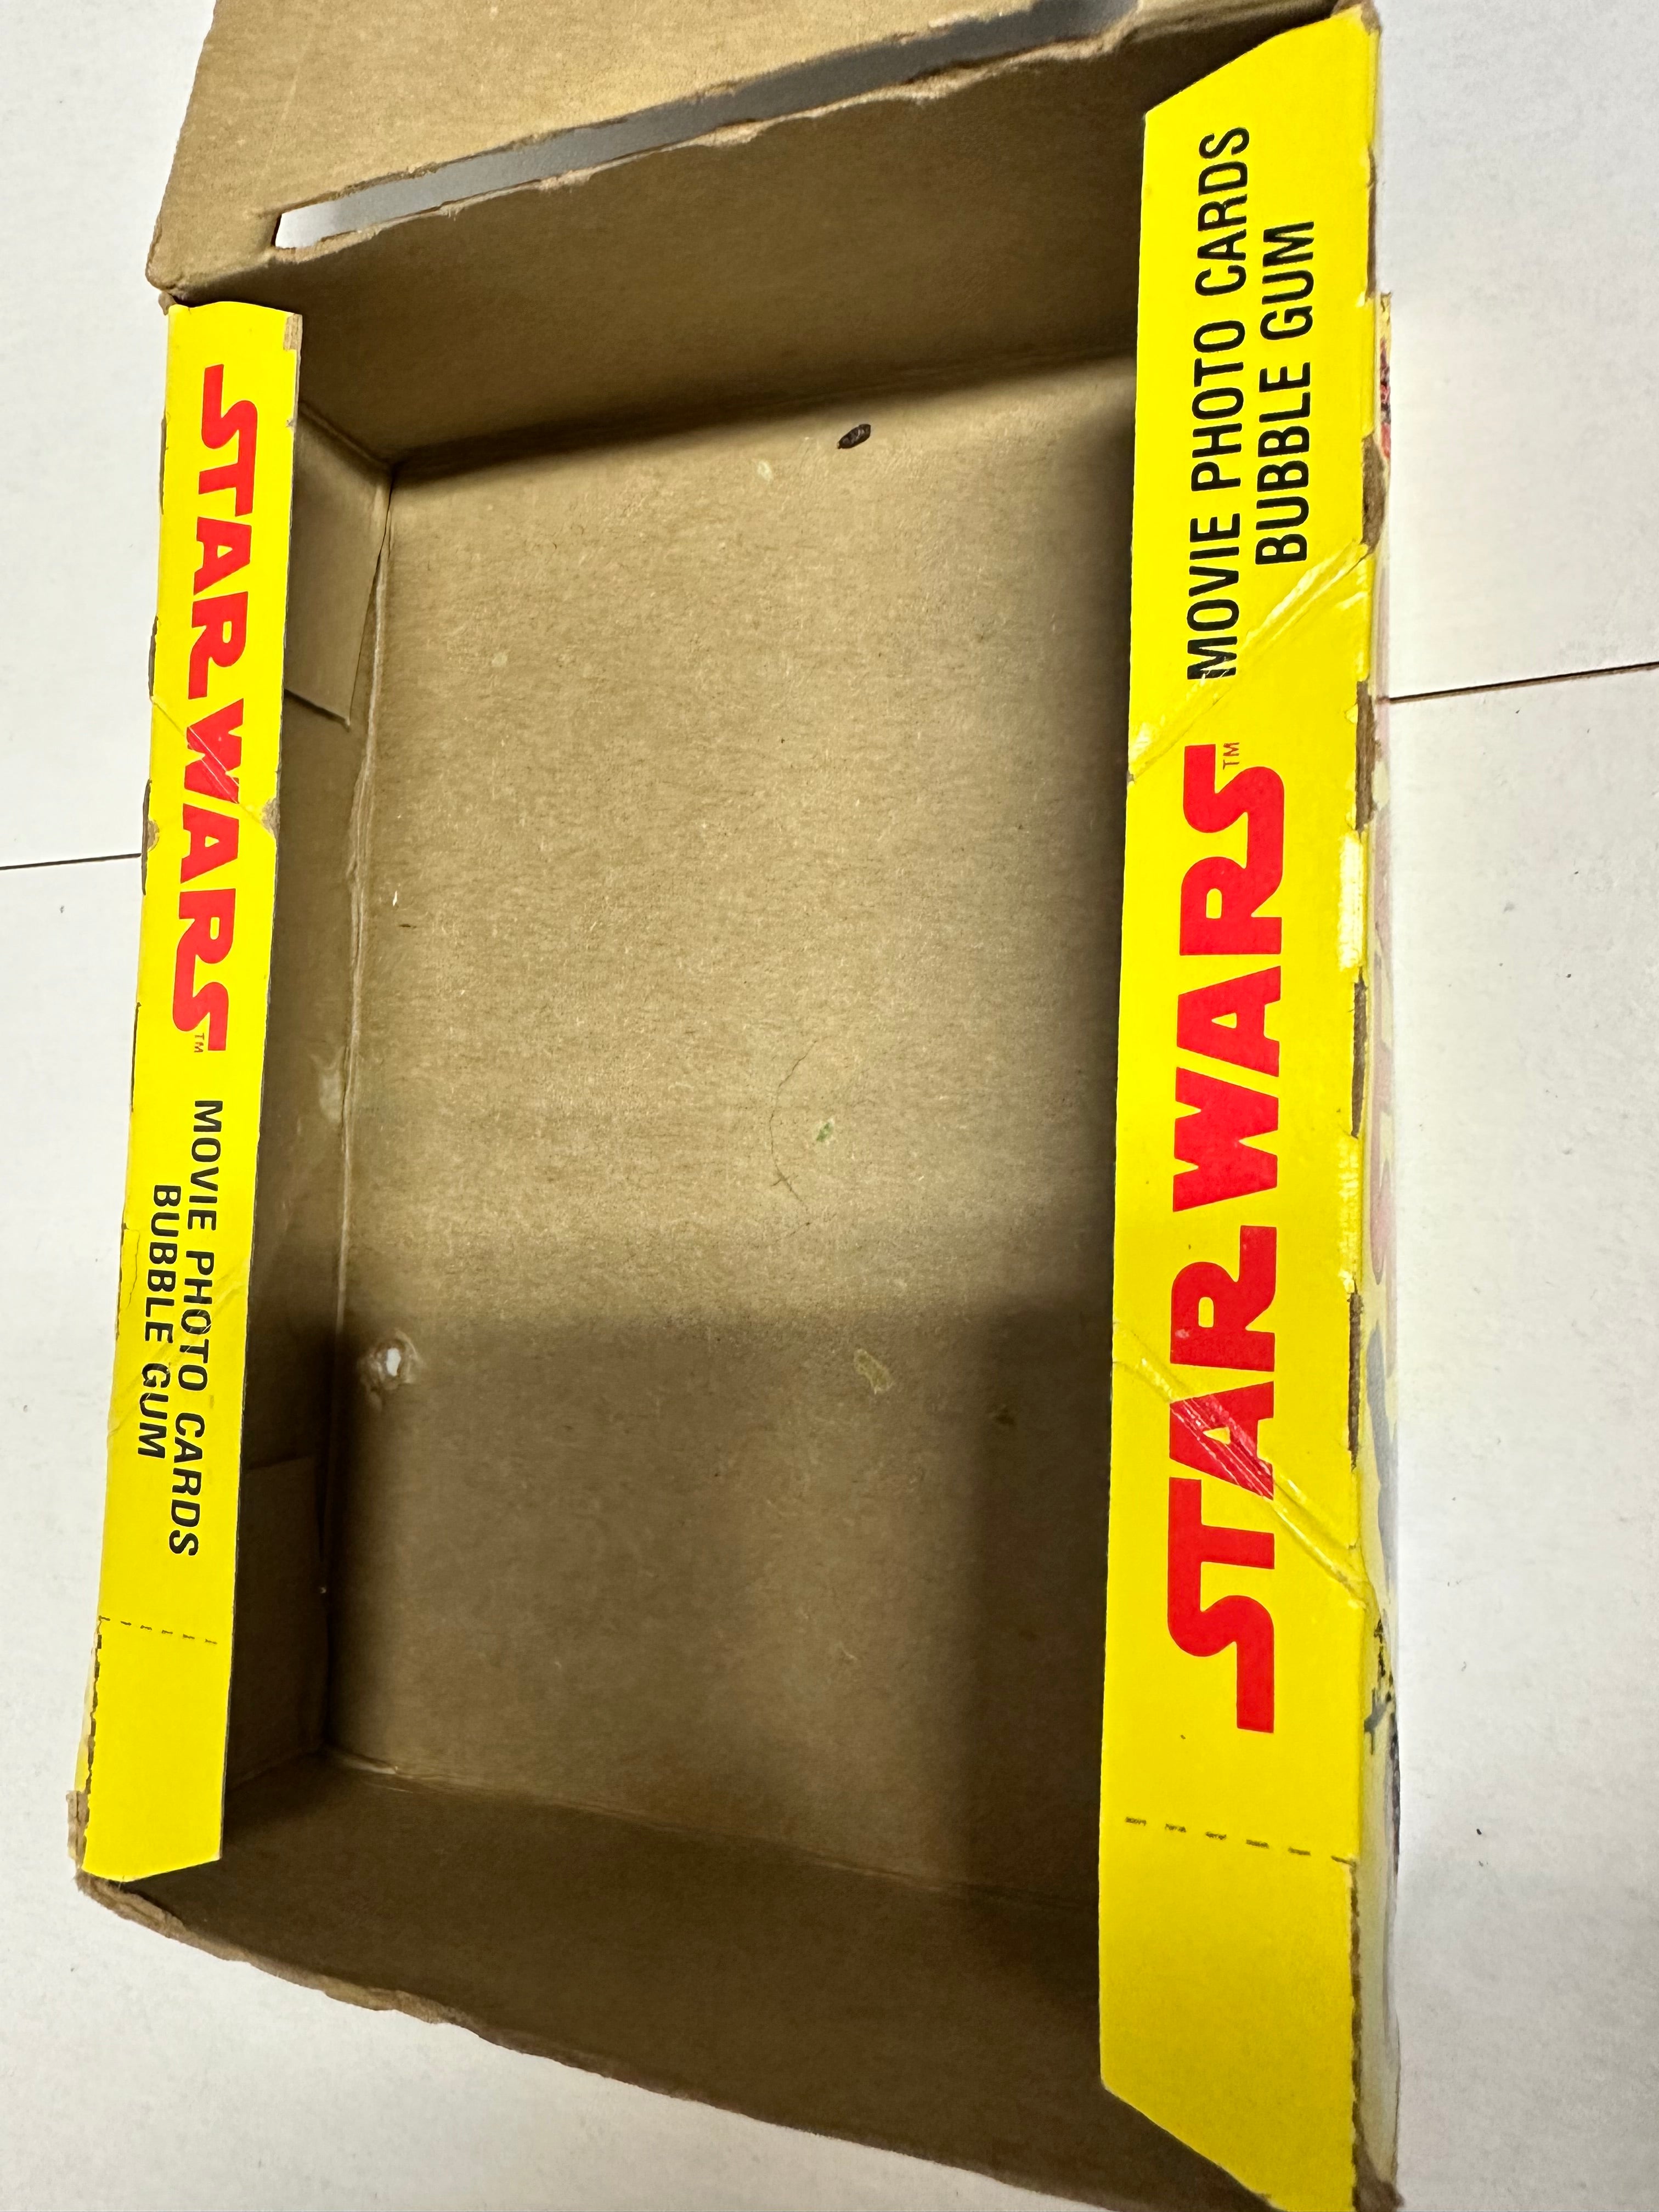 Star Wars series 2 cards empty display Box, 1977